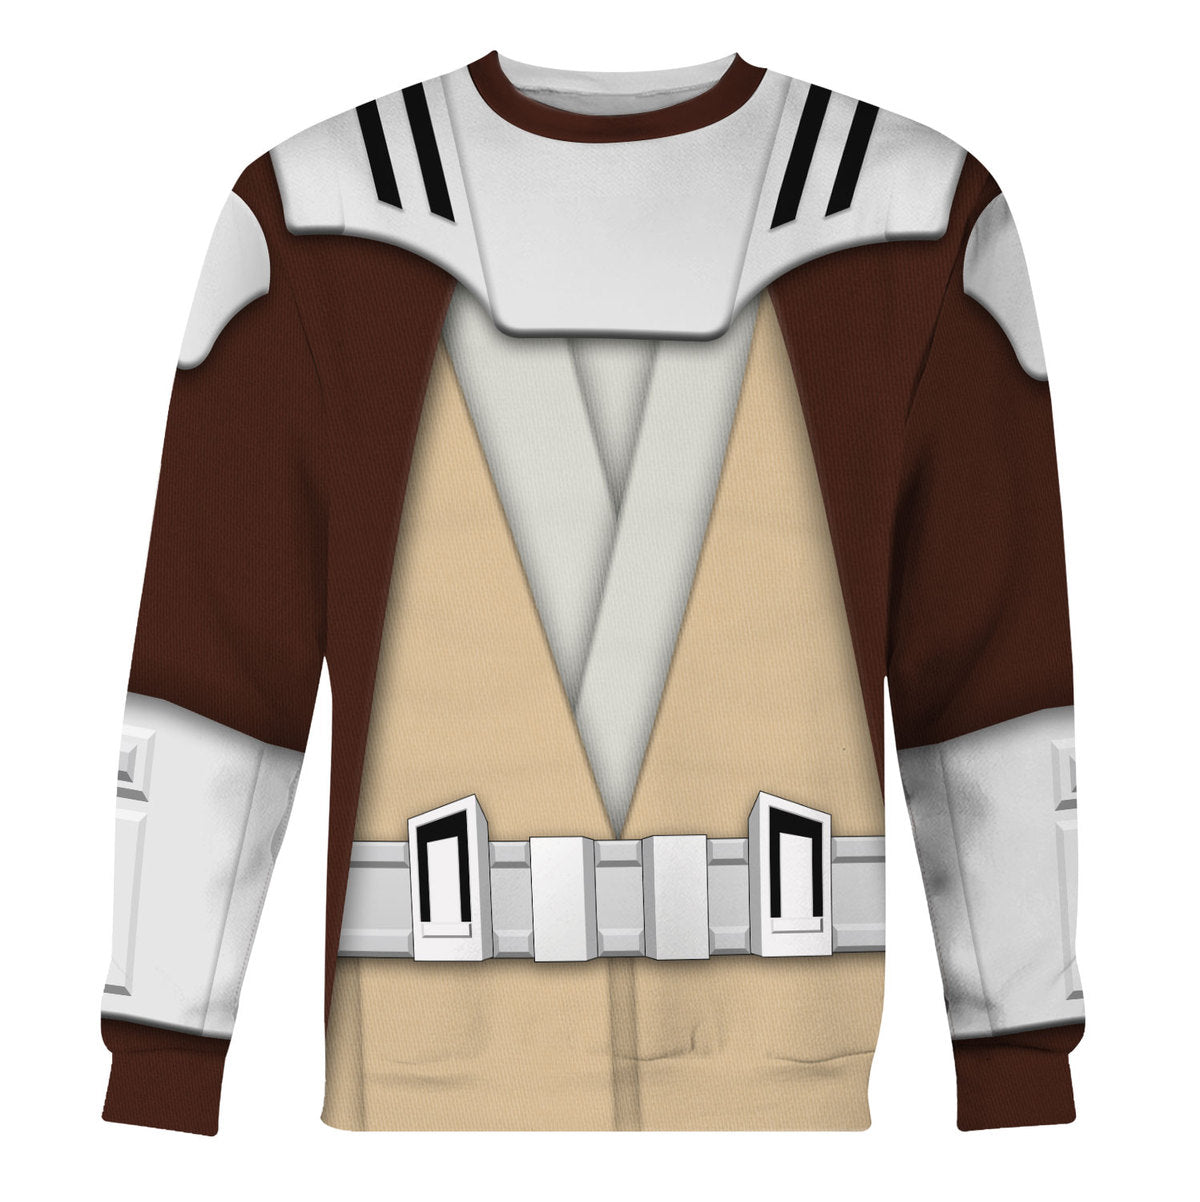 Star Wars Mace Windu's Jedi Robes Costume - Sweater - Ugly Christmas Sweater